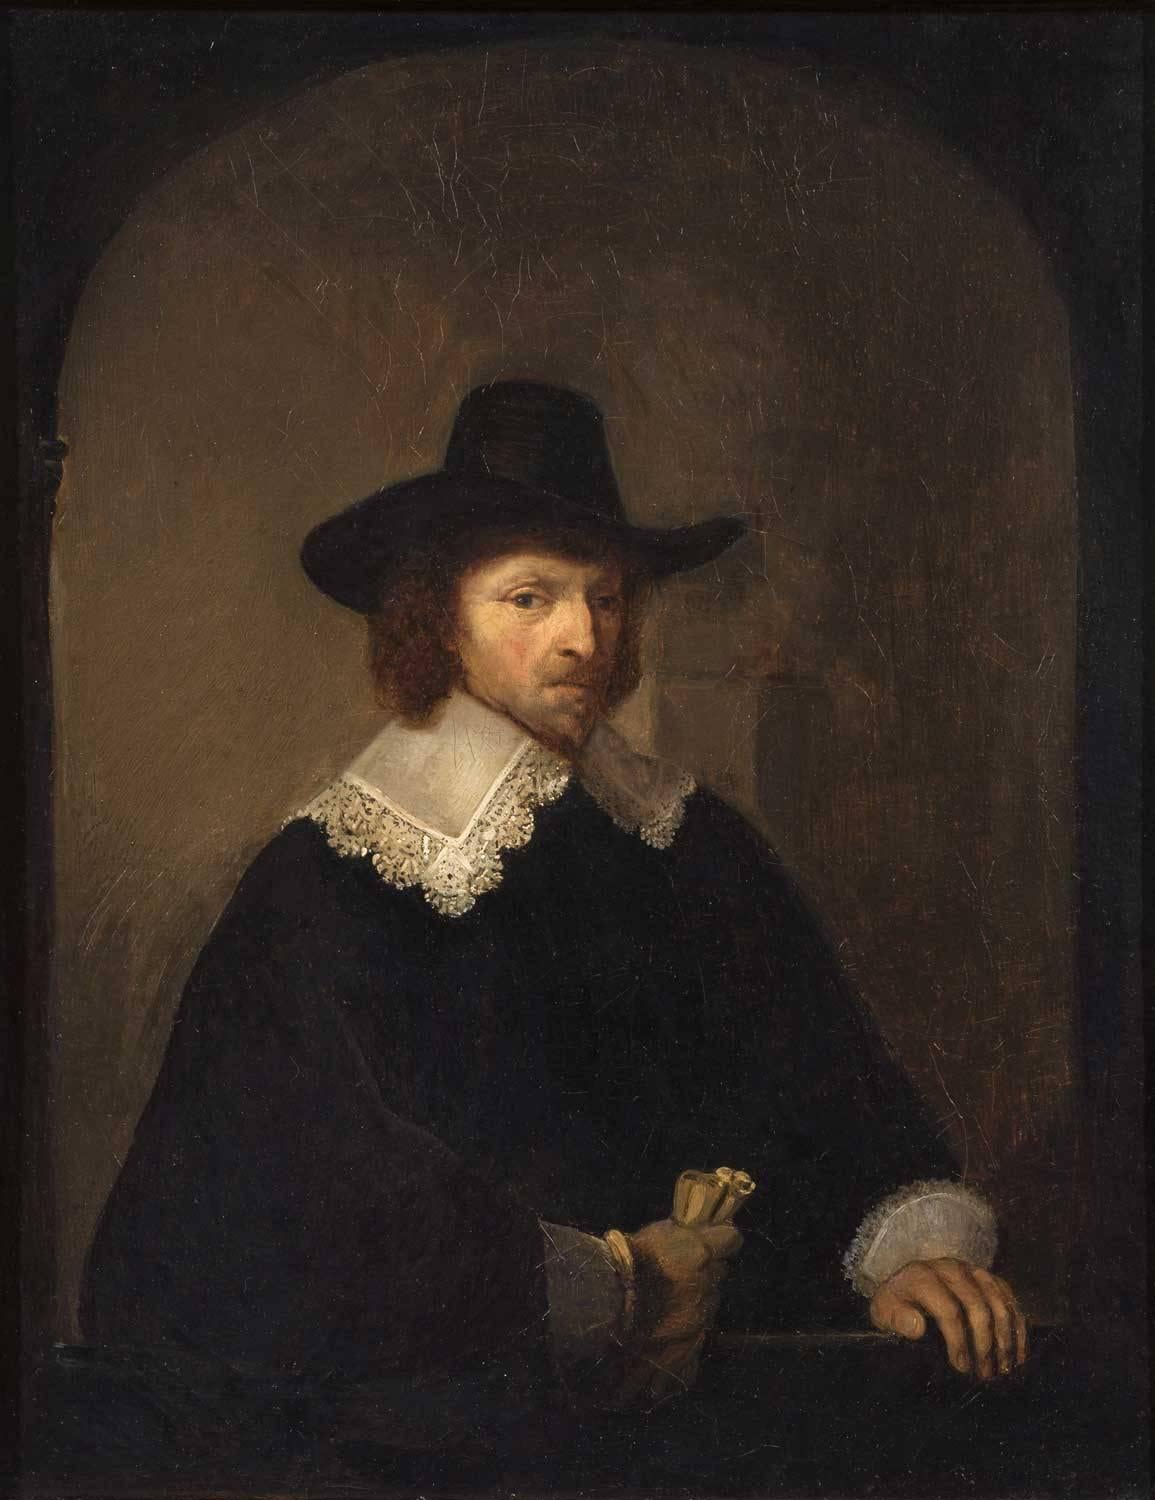 (After) Rembrandt van Rijn  Portrait Painting - Portrait of Nicolaes van Bambeeck - 17th Century Dutch Old Master